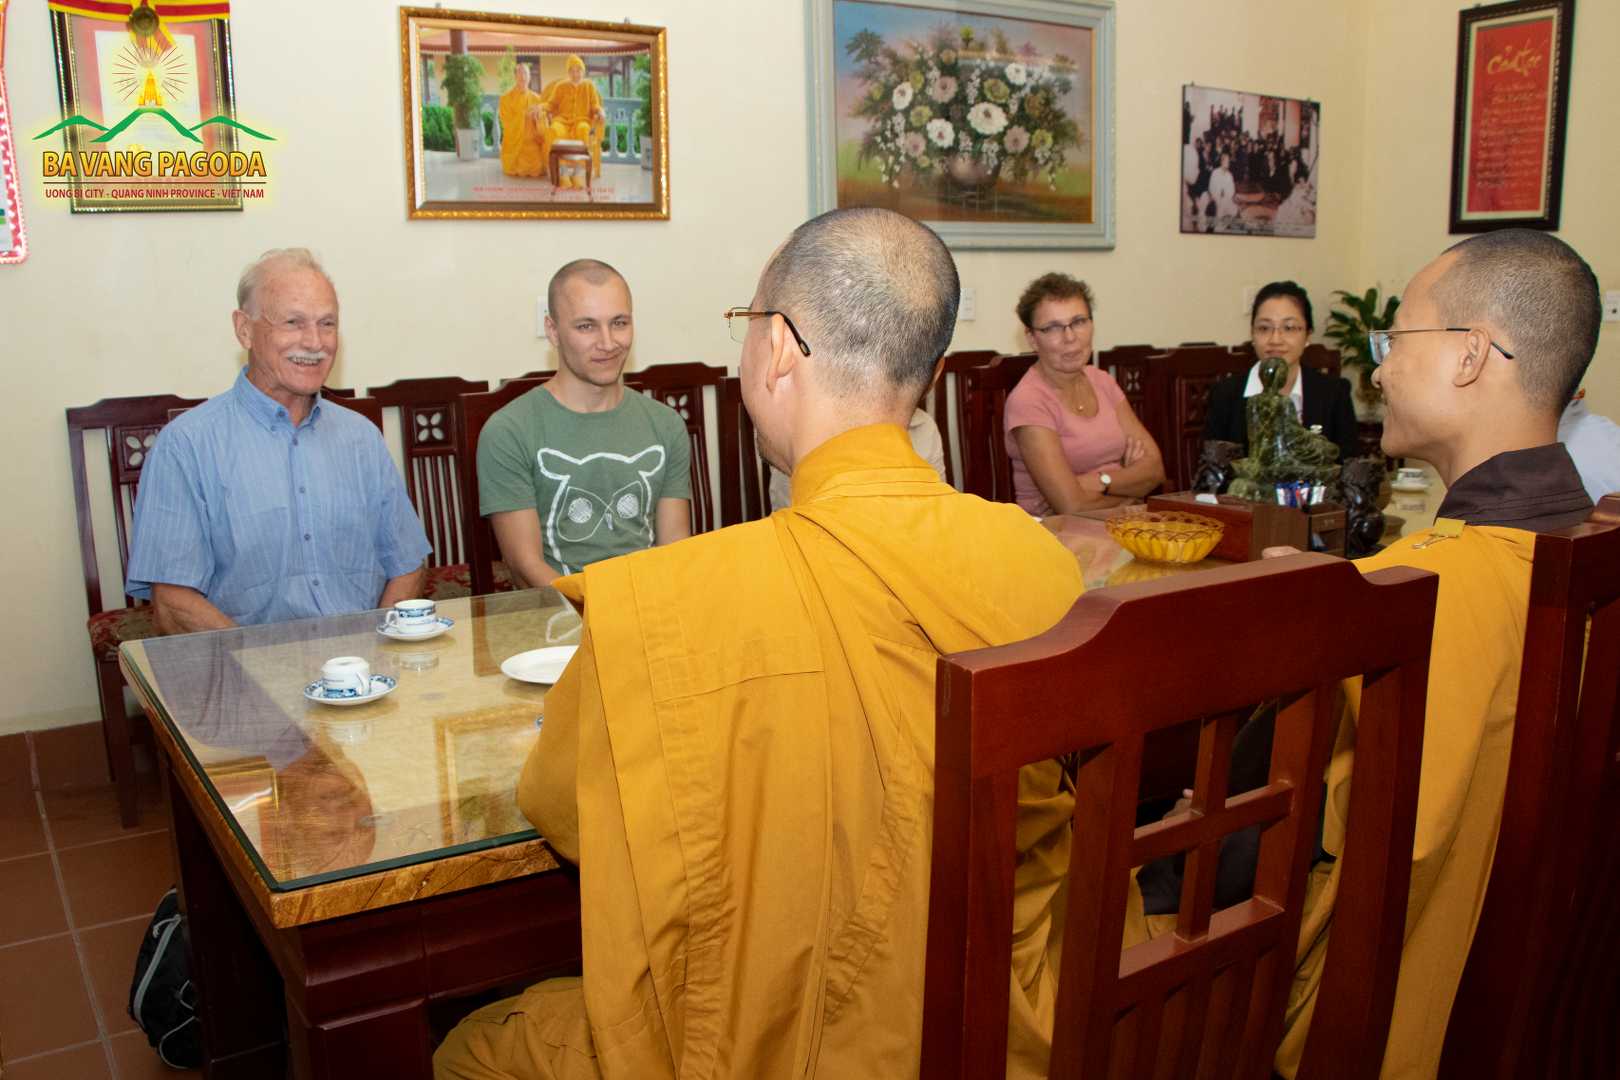 The-delegations-feeling-about-Ba-Vang-Pagoda-2